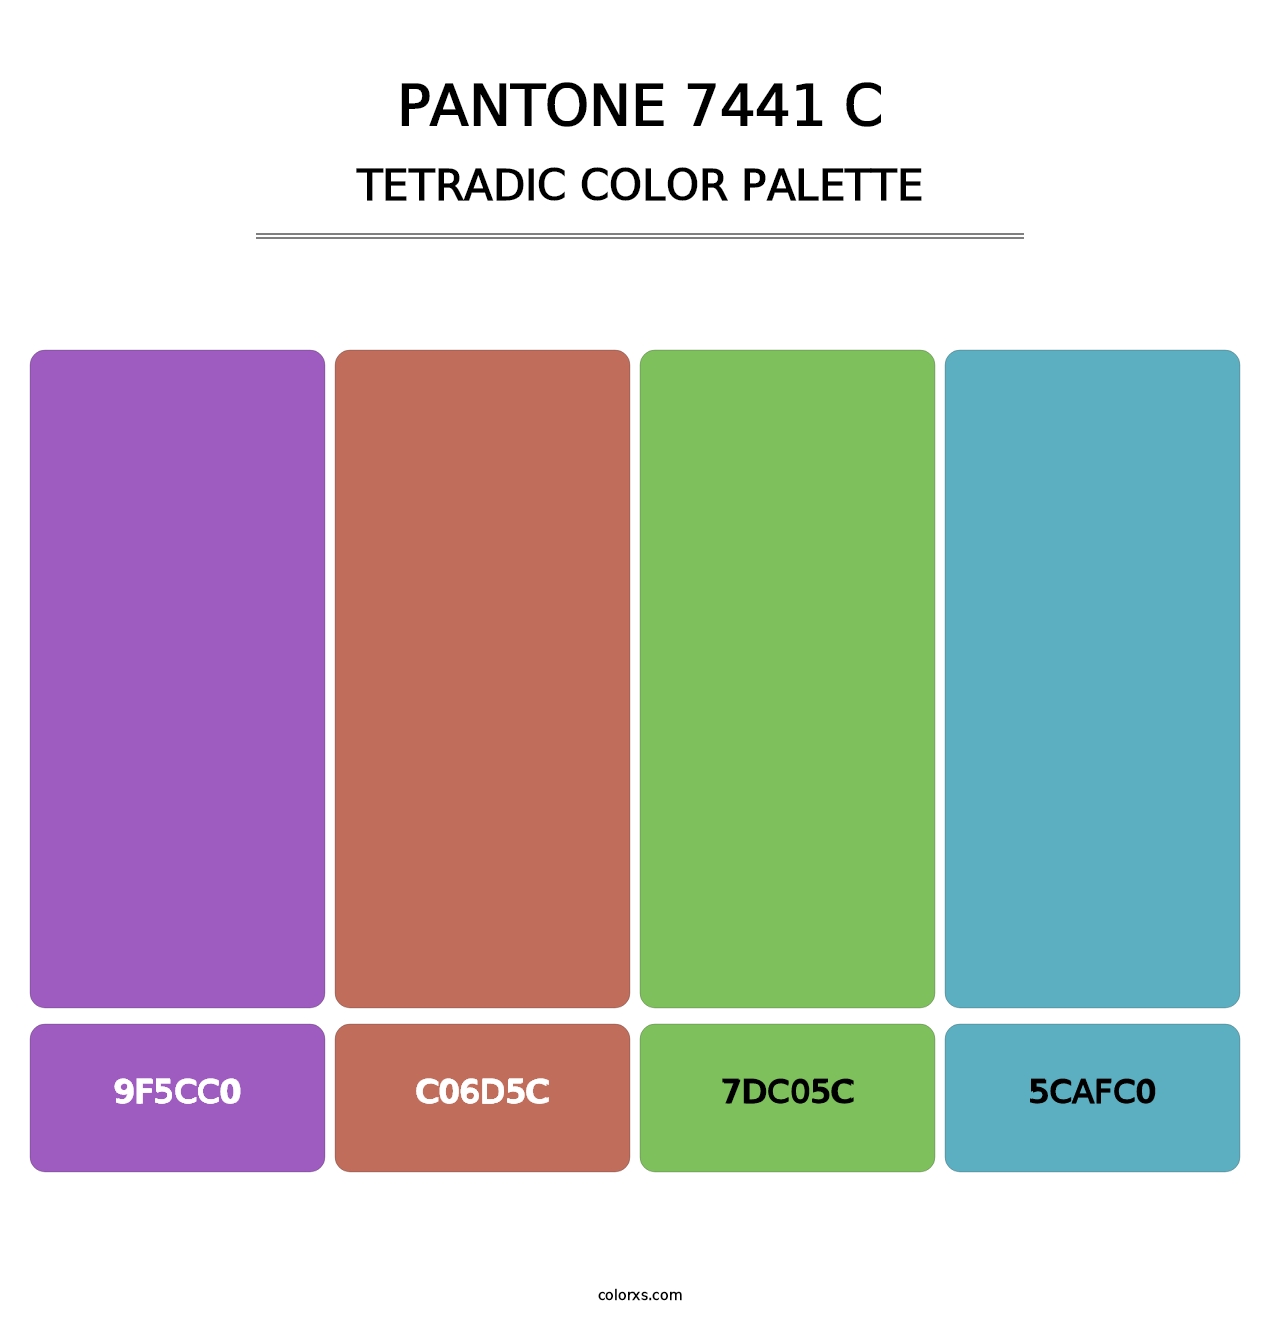 PANTONE 7441 C - Tetradic Color Palette